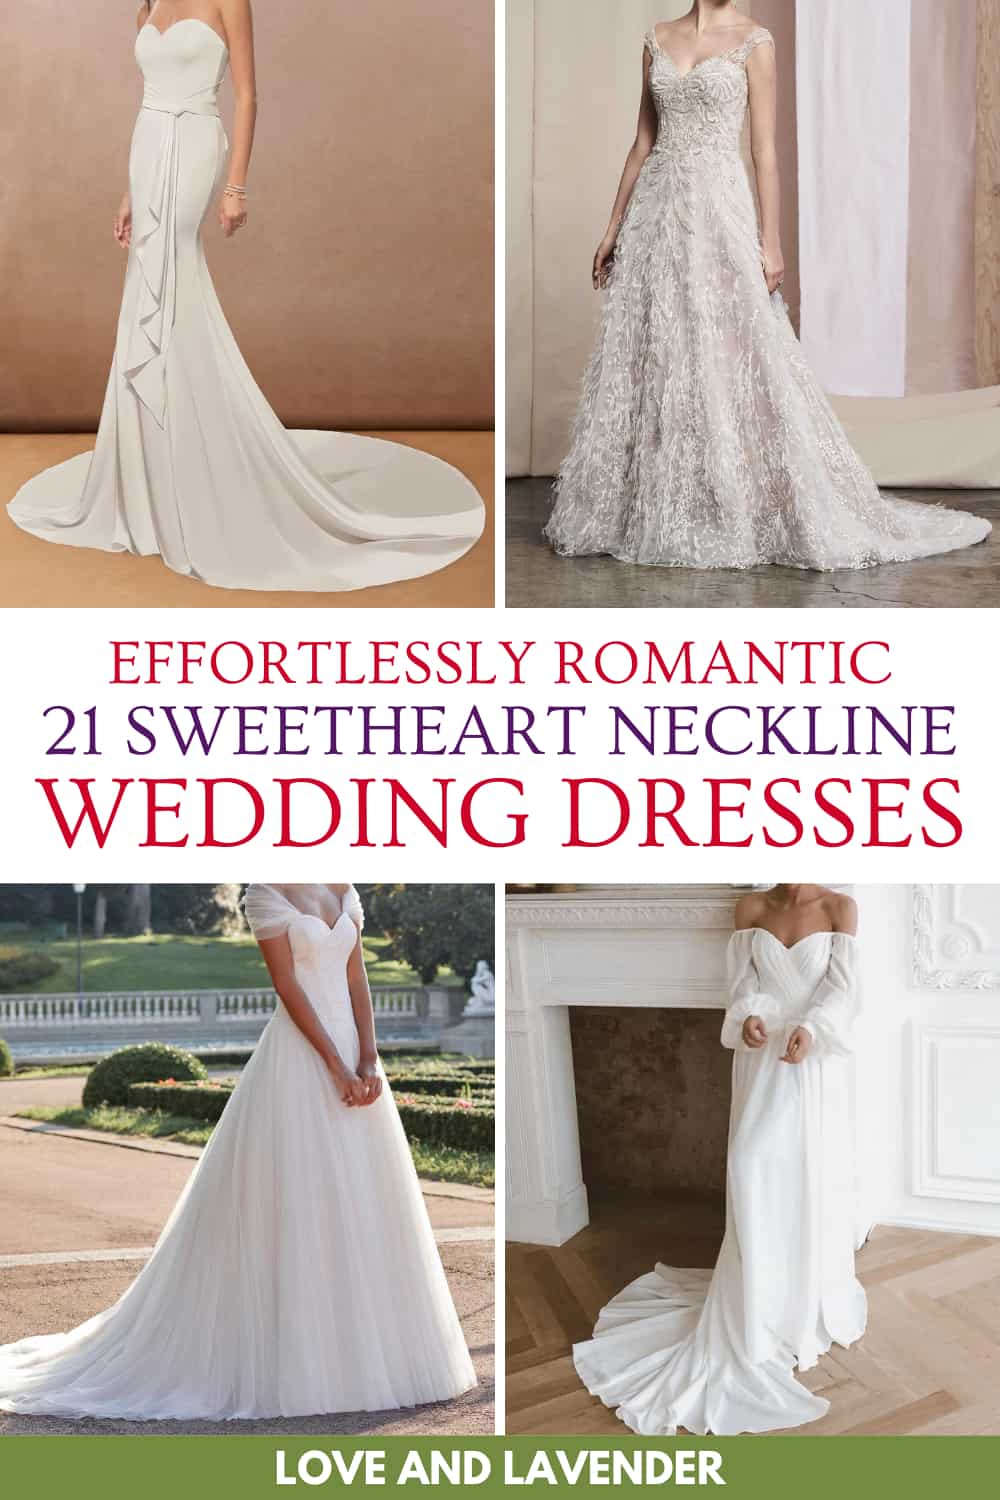 21 Sweetheart Neckline Wedding Dresses - Pinterest pin